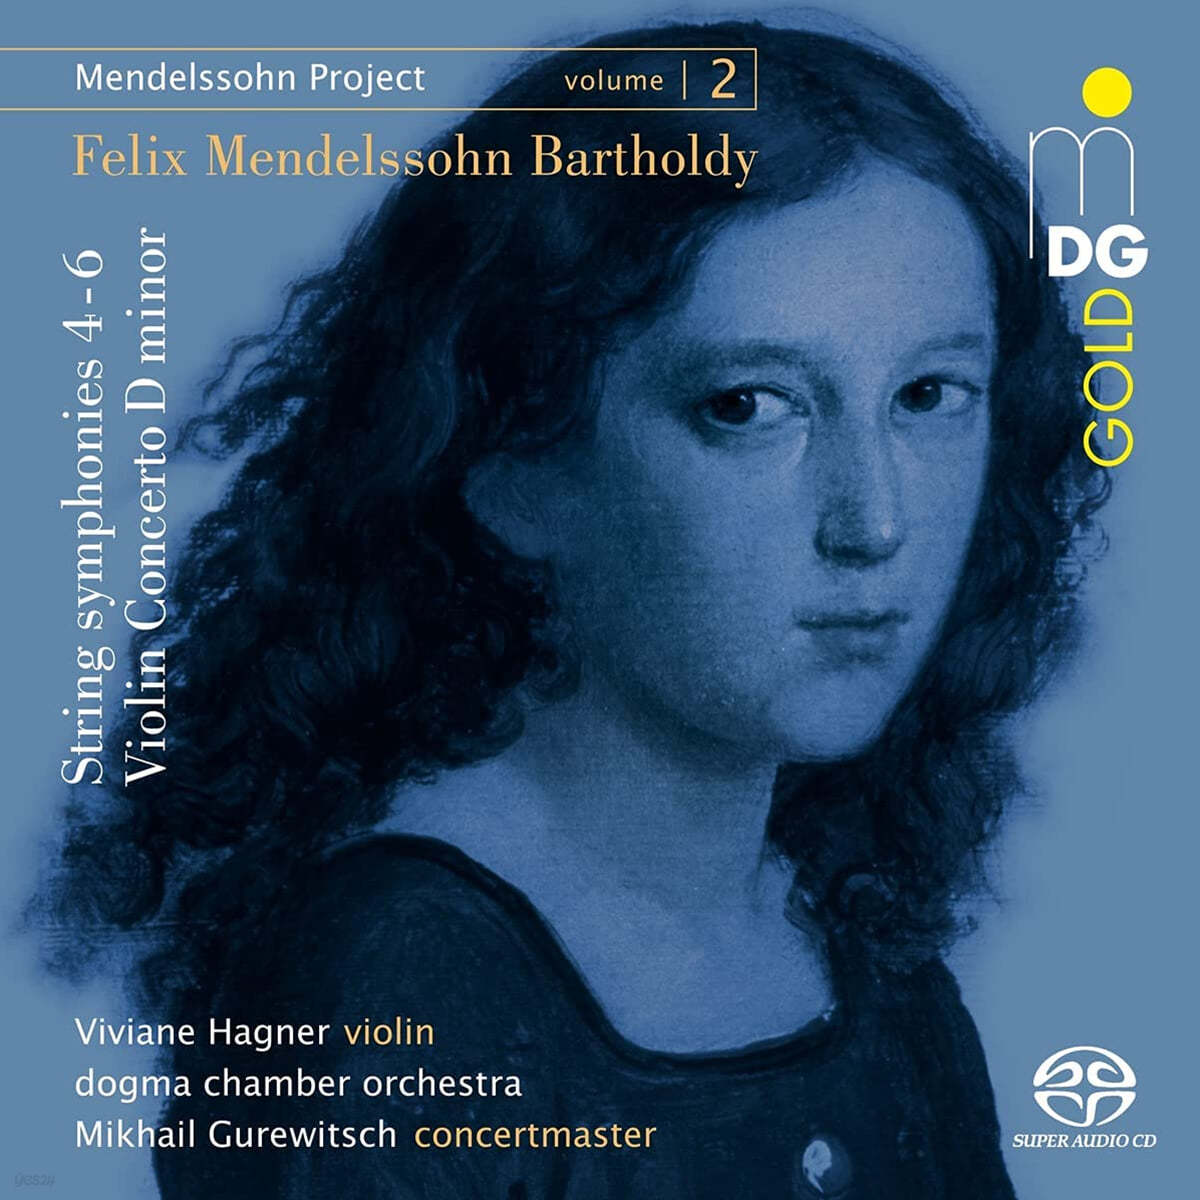 Mikhail Gurewitsch 멘델스존 프로젝트 2집 (Mendelssohn Project vol. 2)